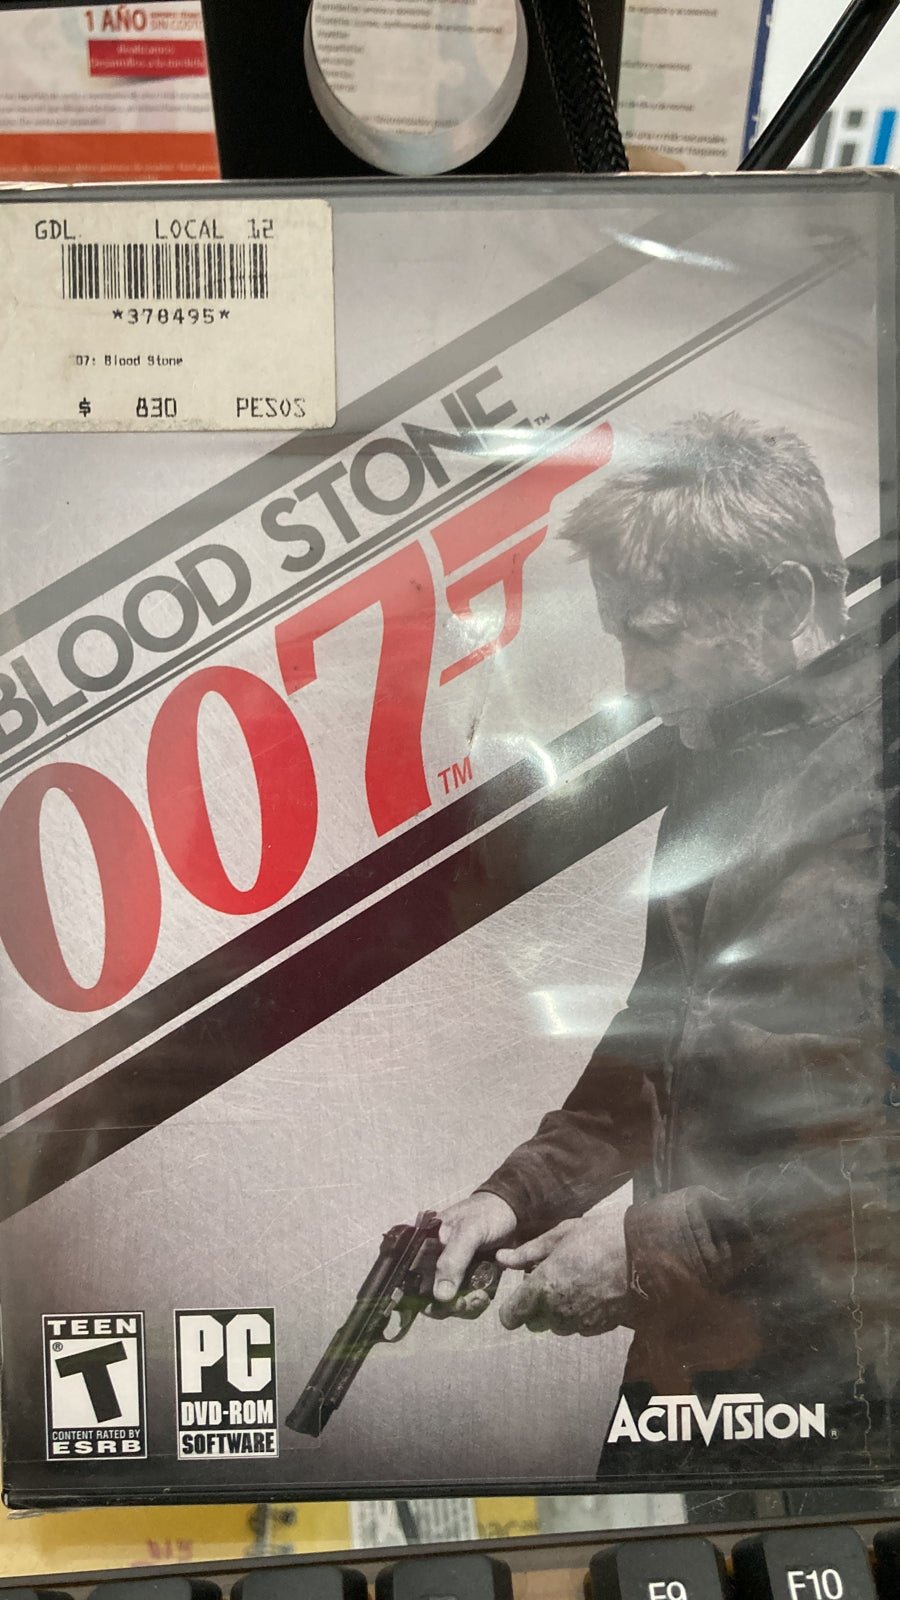 PC Blood Stone 007 - NOORHS Latinoamérica, S.A. de C.V.